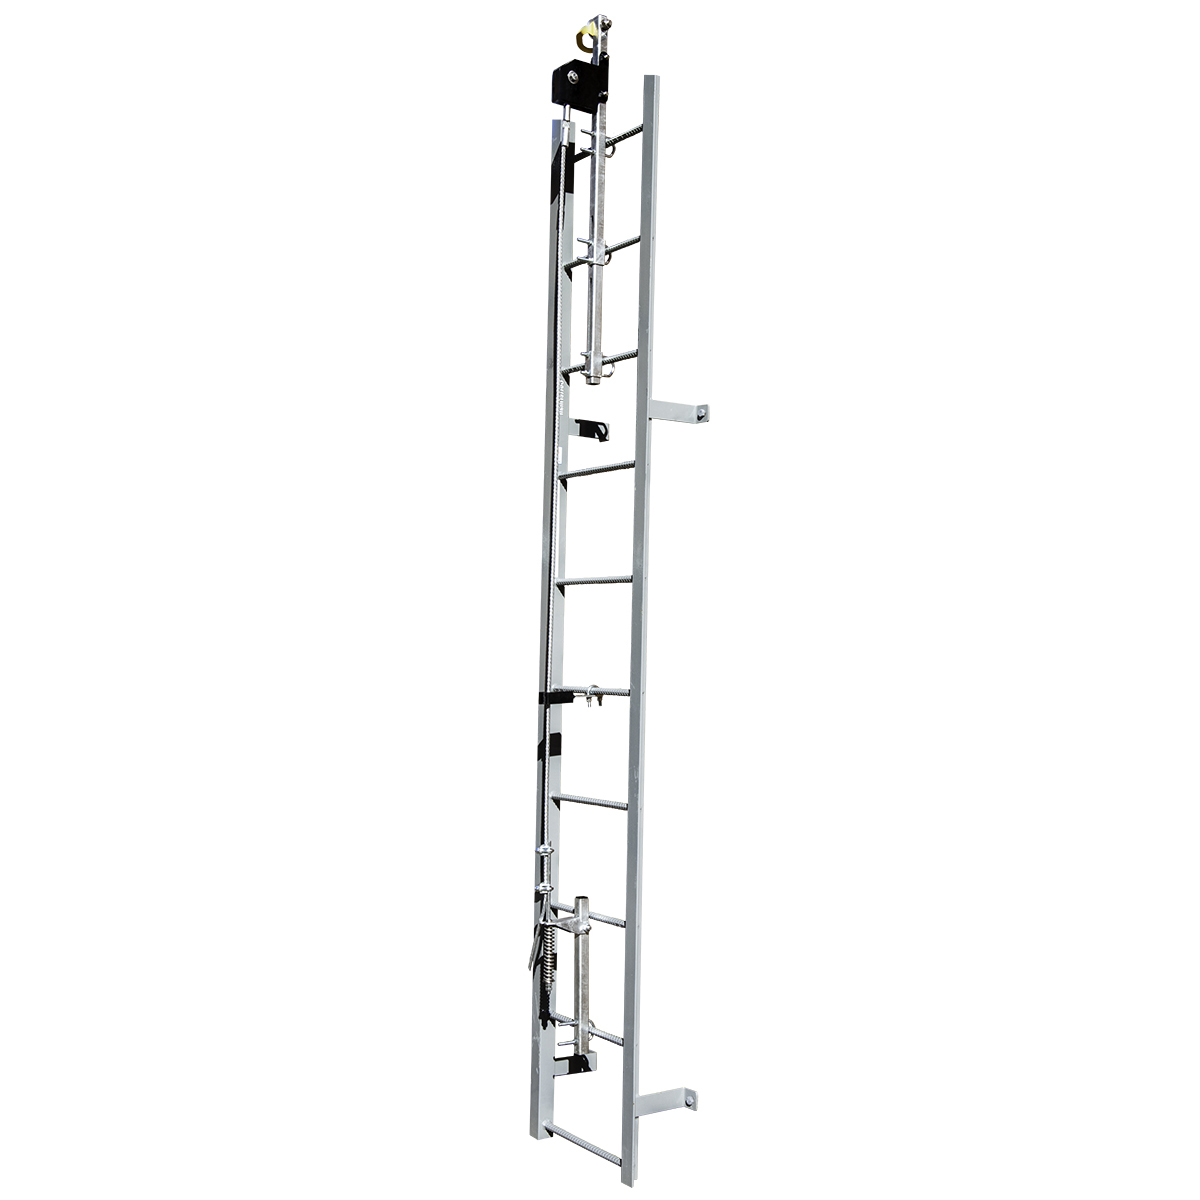 SafeWaze 90' VLL Cable Ladder System, 4-person Complete Kit